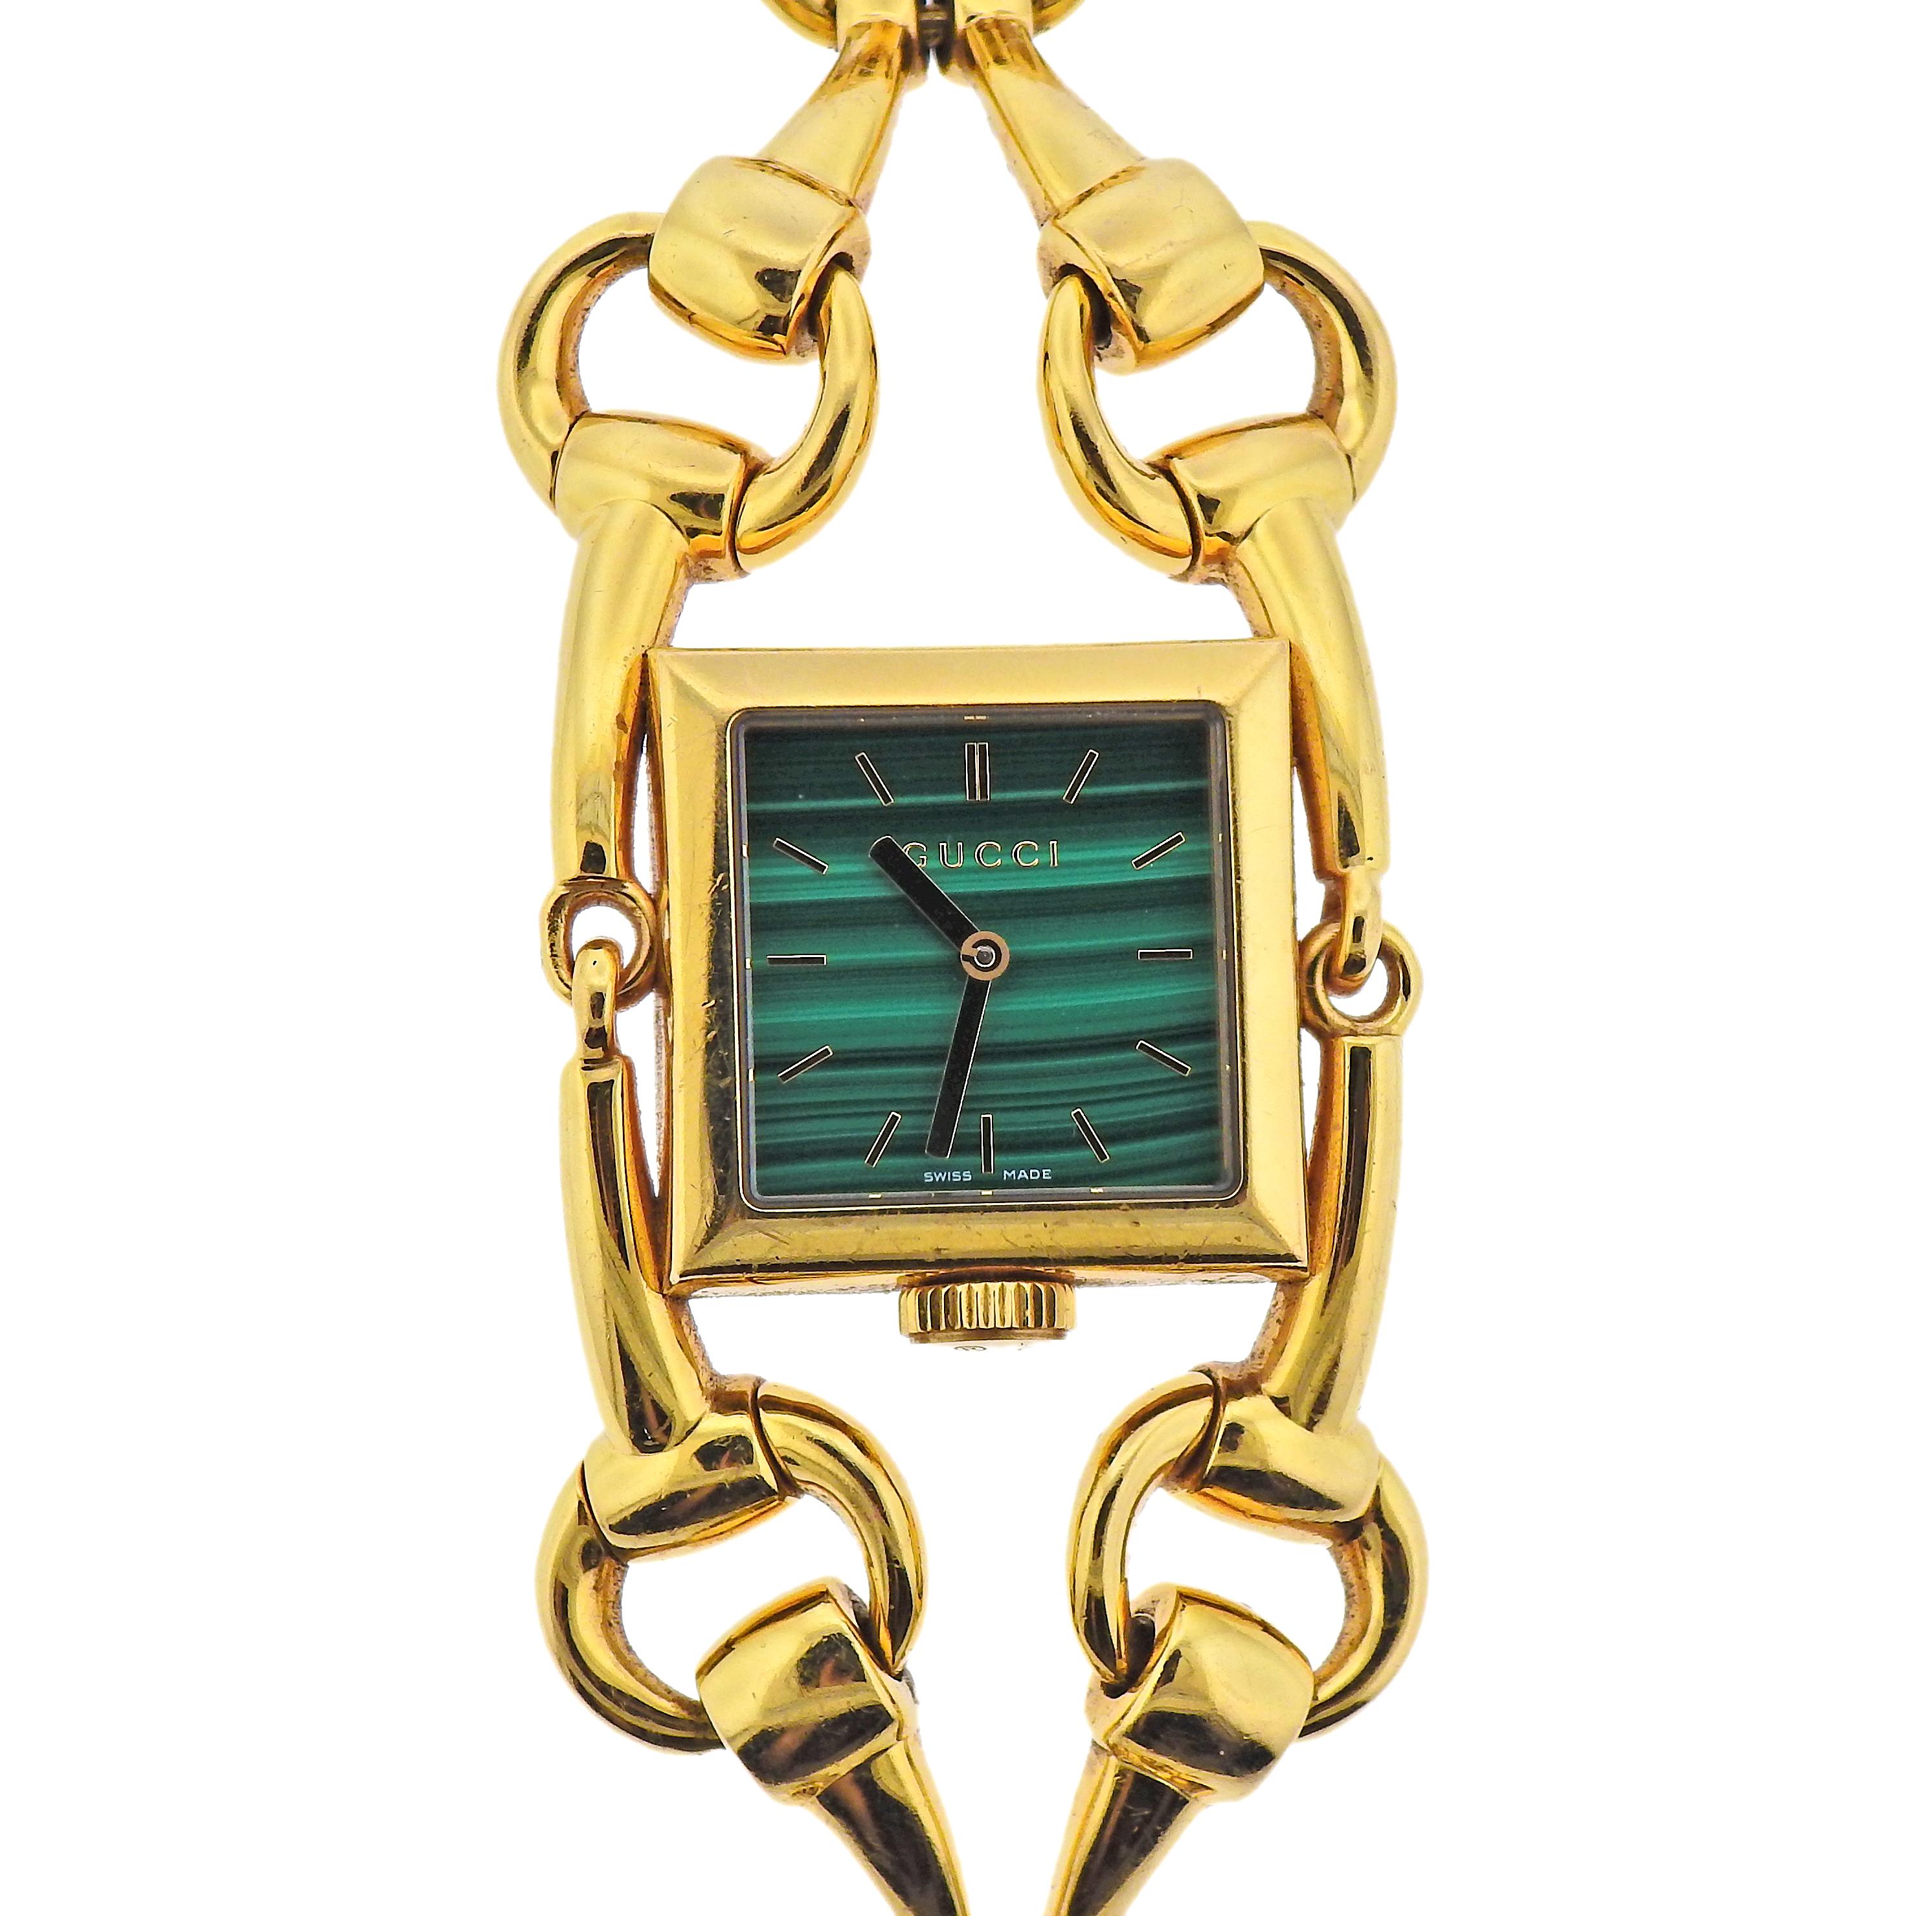 18k yellow gold Gucci Horsebit watch bracelet with malachite dial. Watch with quartz movement. Bracelet is 6